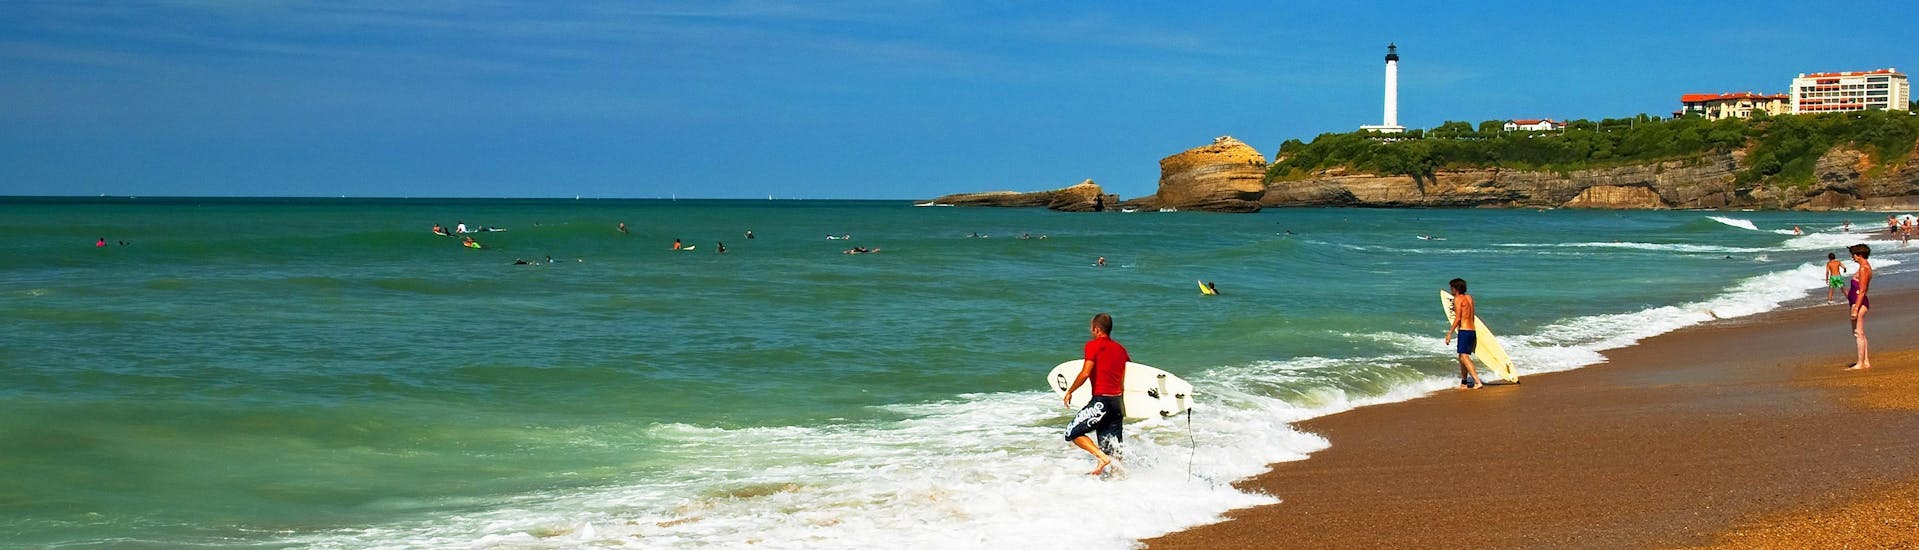 Una surfista sfida le onde facendo surf presso La Côte des Basques.